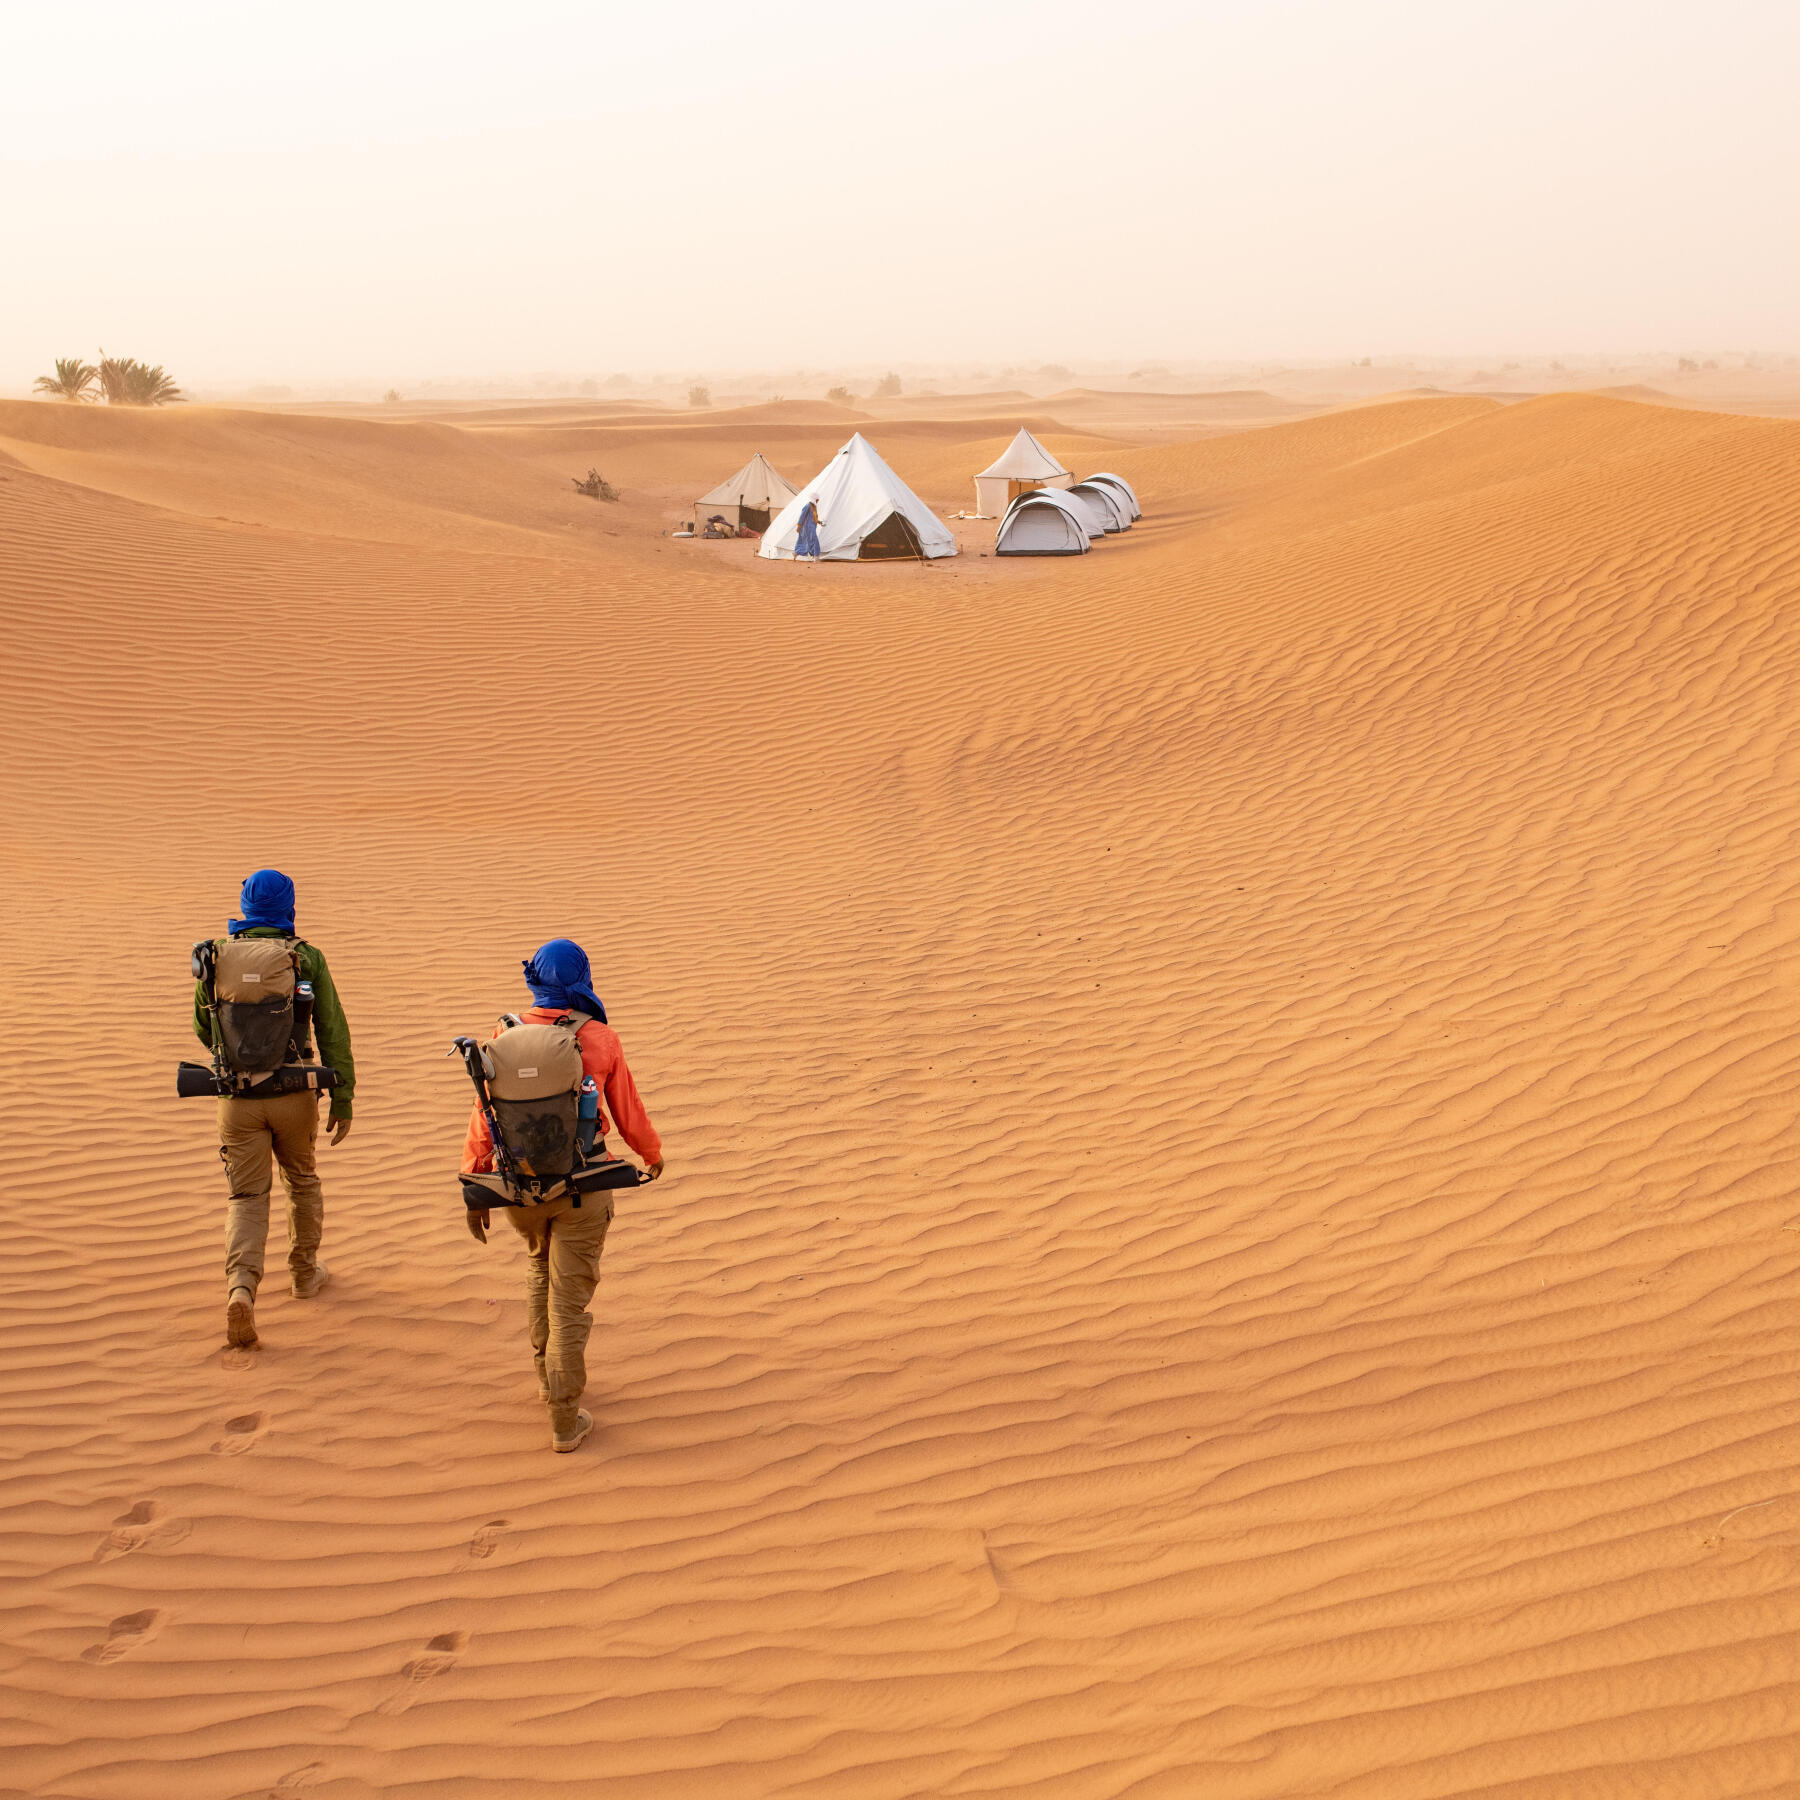 trekking in the Sahara desert in Morocco with the Bedouins